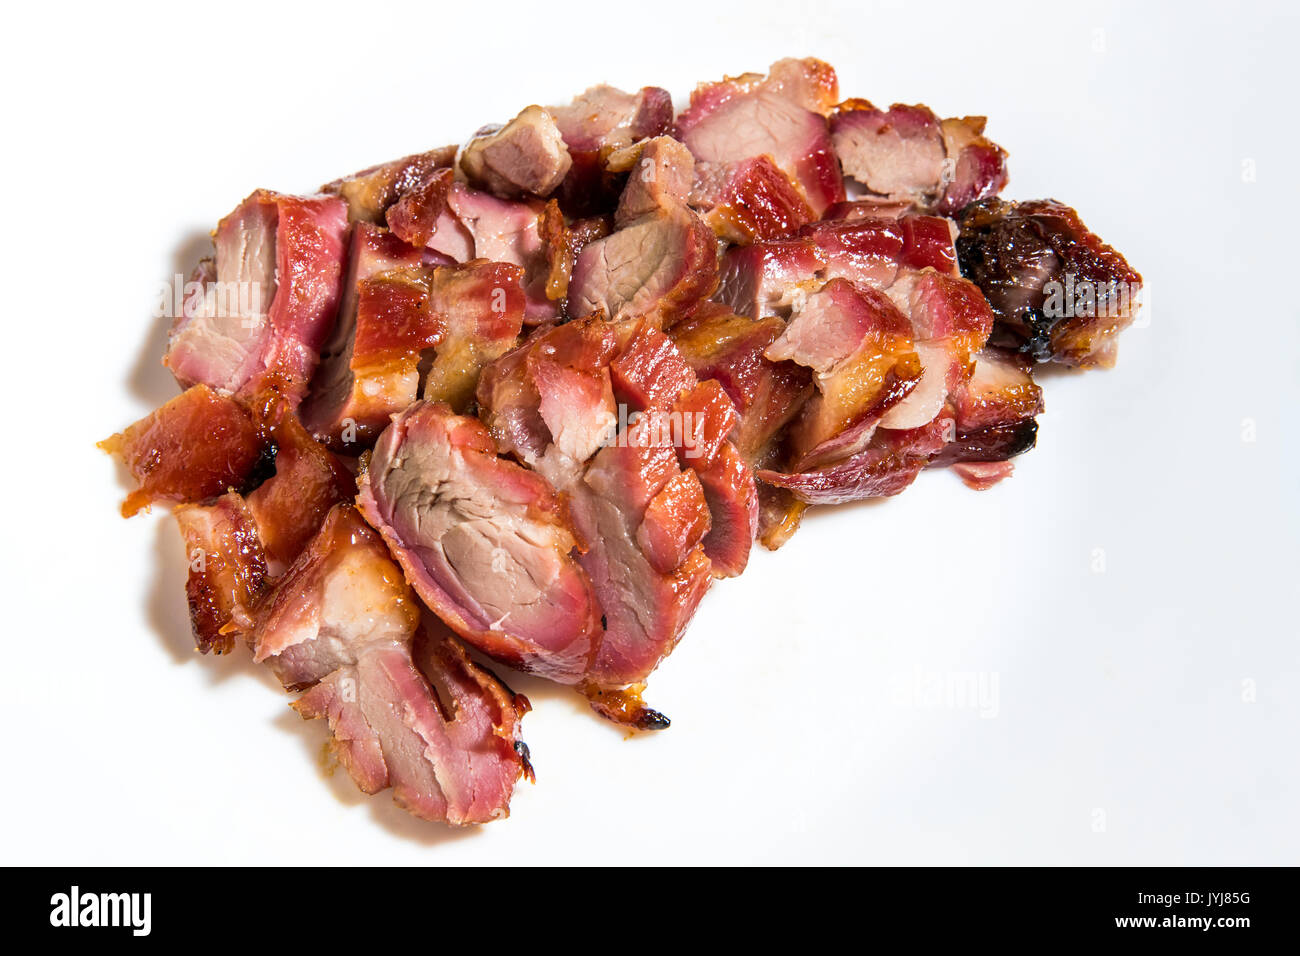 Cantonese barbecued pork - Char siu Stock Photo